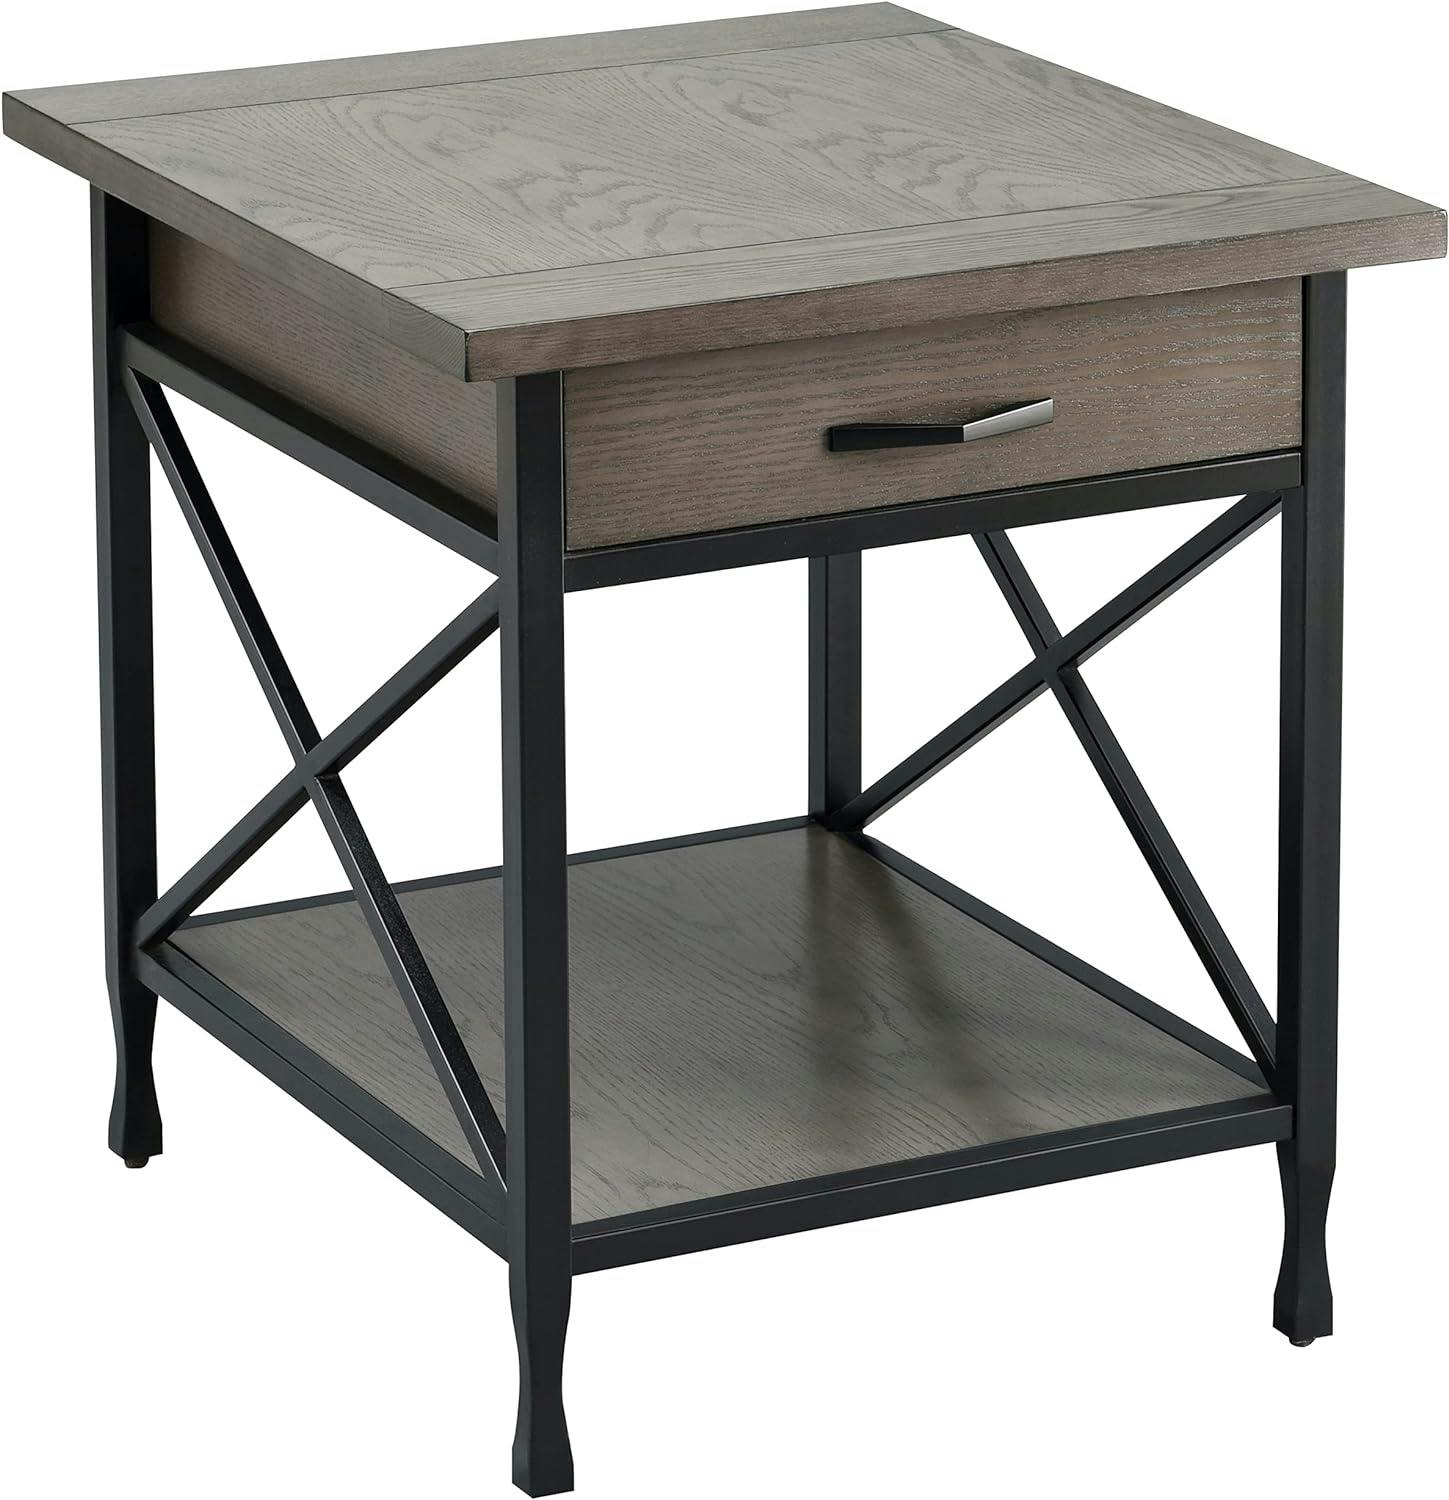 Smoky Gray Oak & Matte Black Metal Square Side Table with Storage